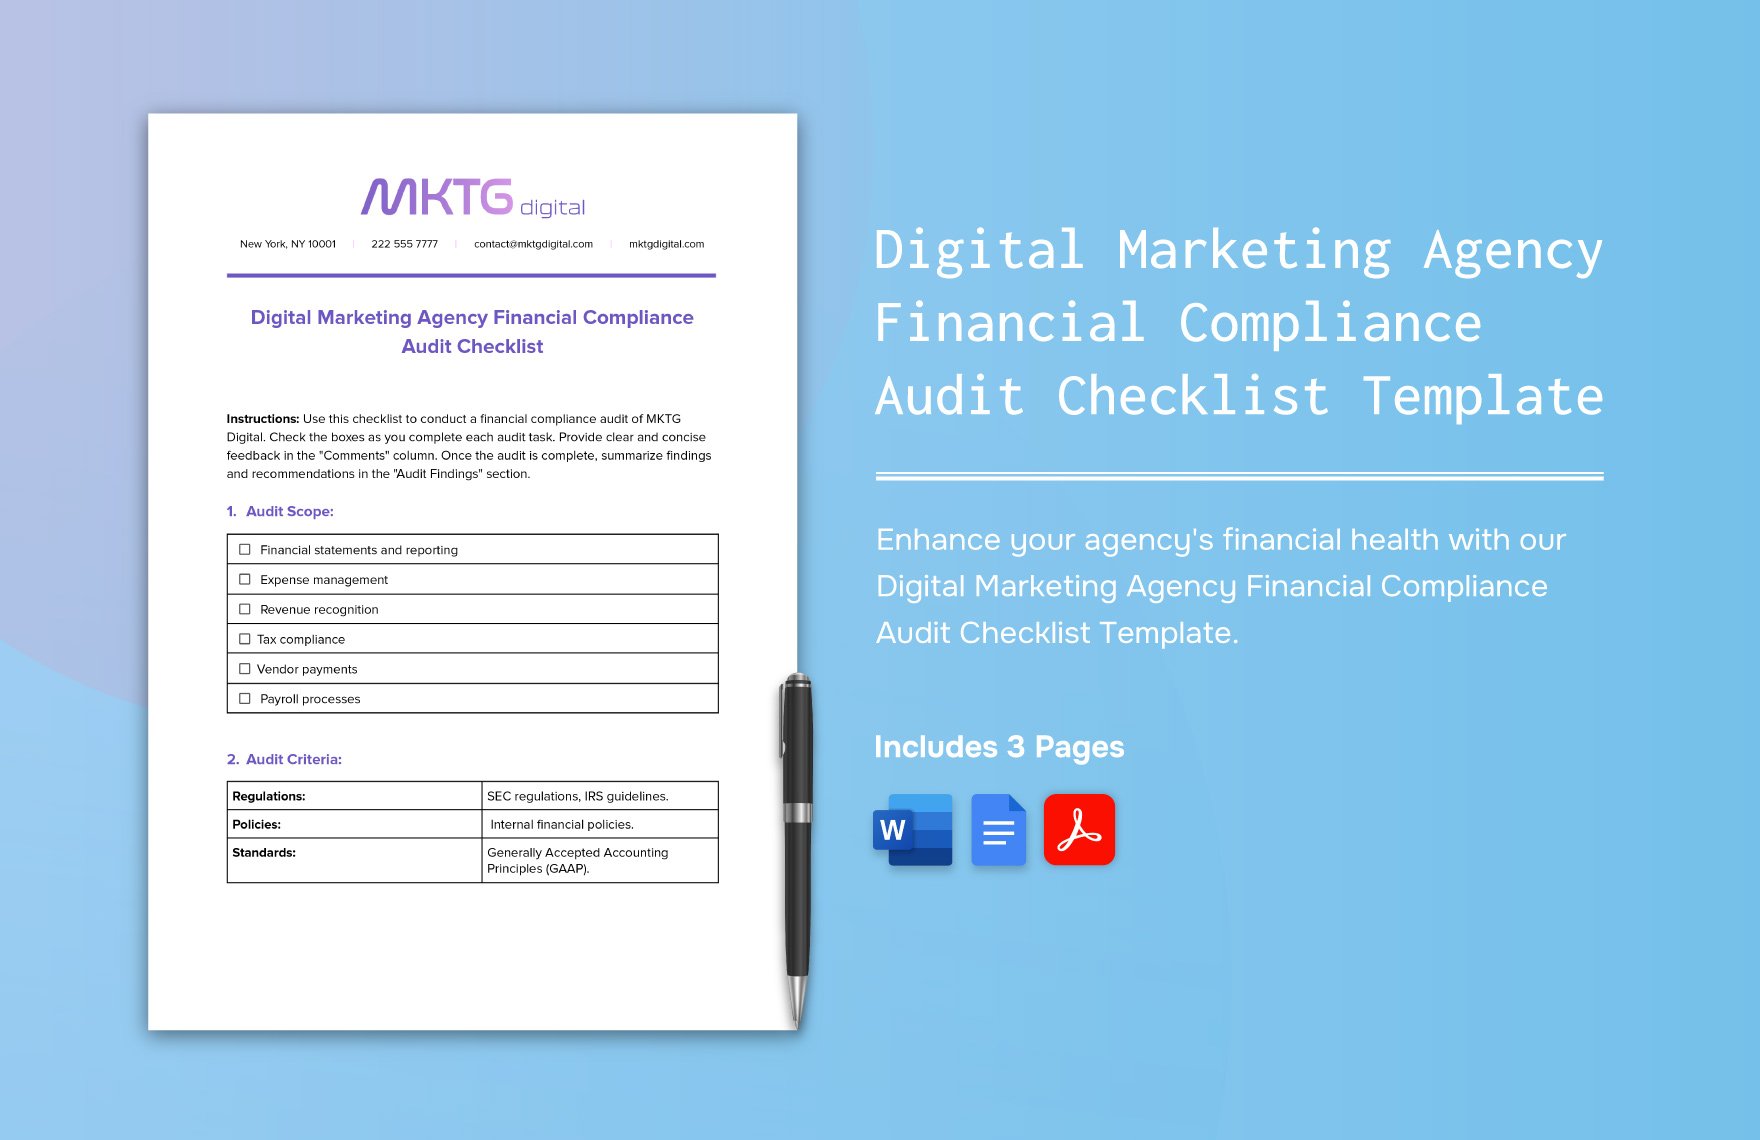 Digital Marketing Agency Financial Compliance Audit Checklist Template